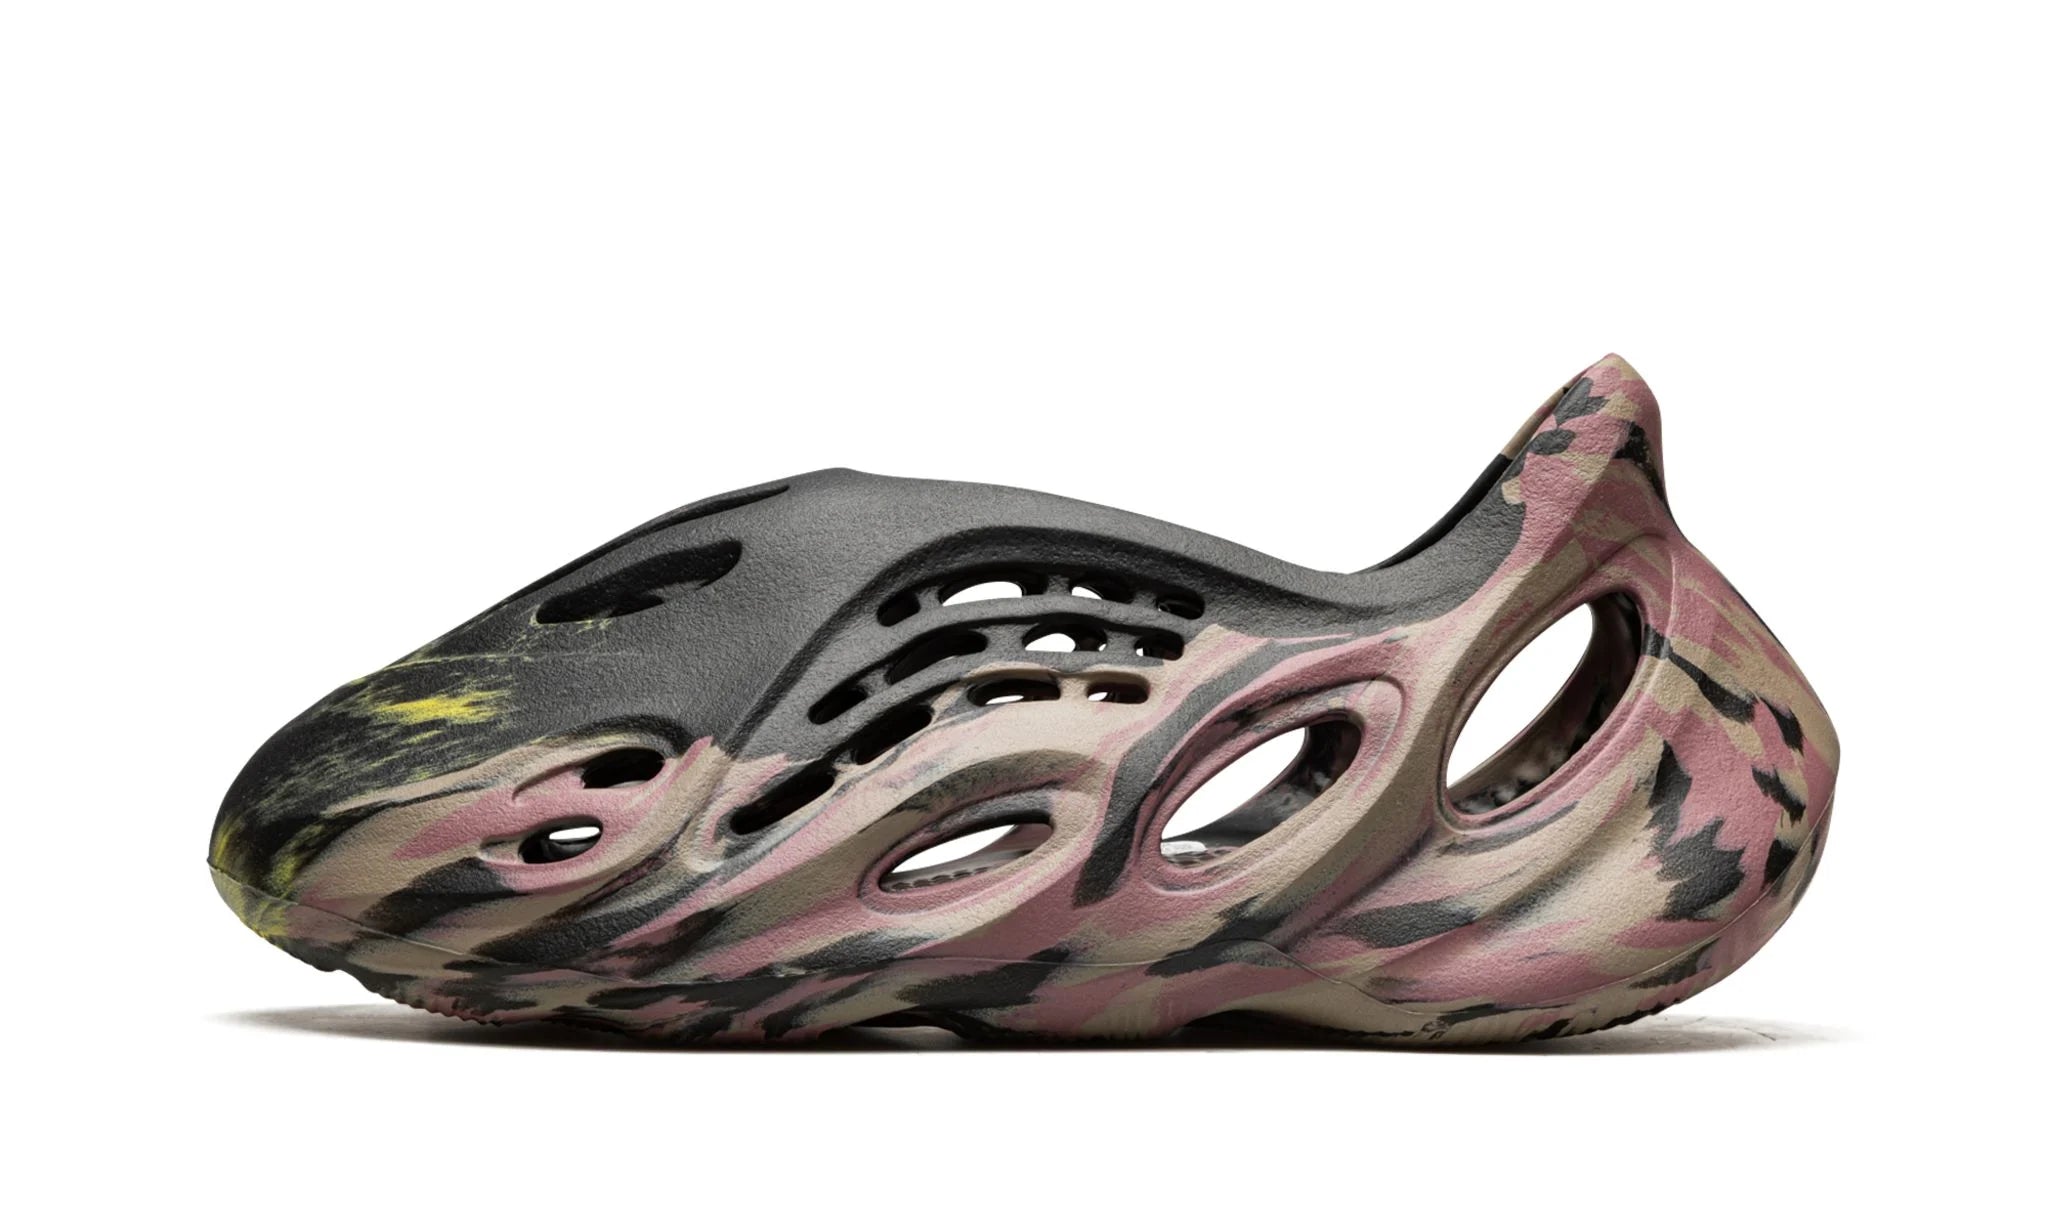 Adidas Yeezy Foam Runner MX Carbon - Yeezy Foam Runner - Pirri